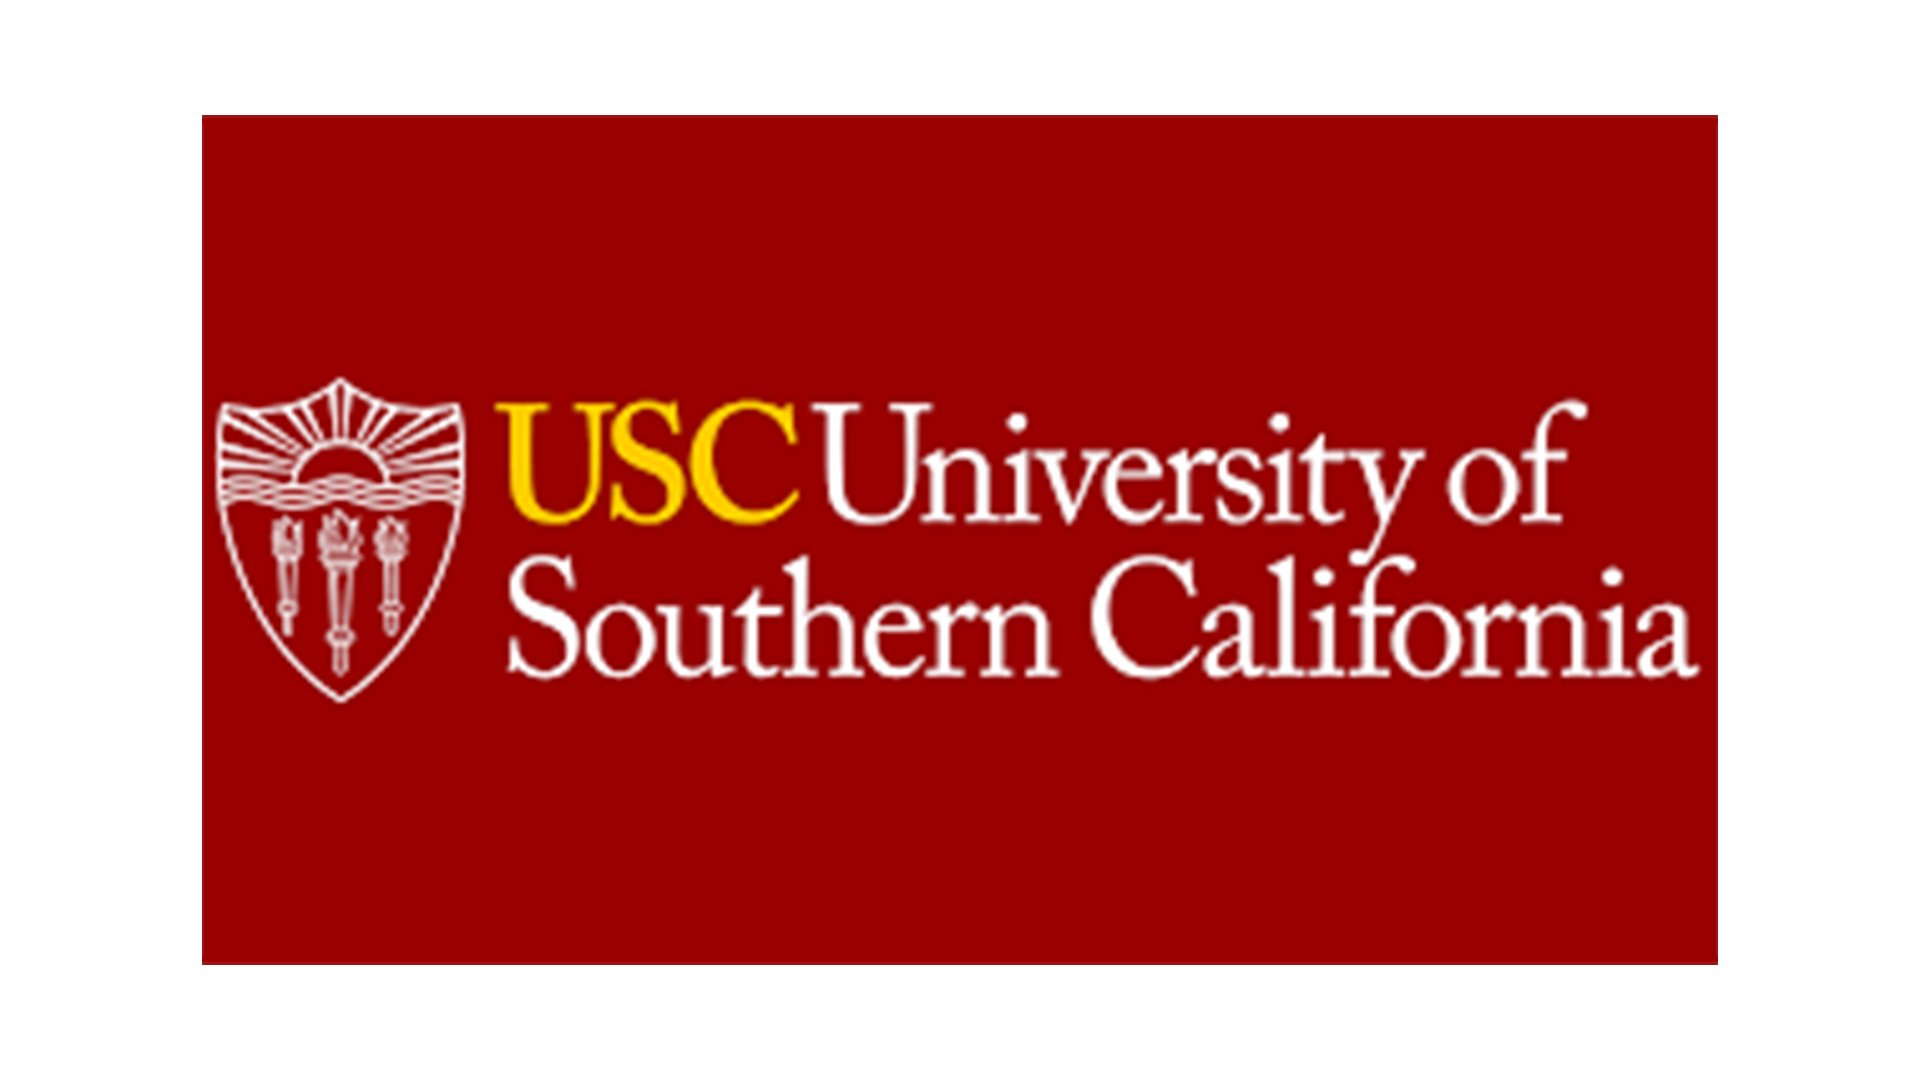 CEOi_0006_University of Southern California.jpg